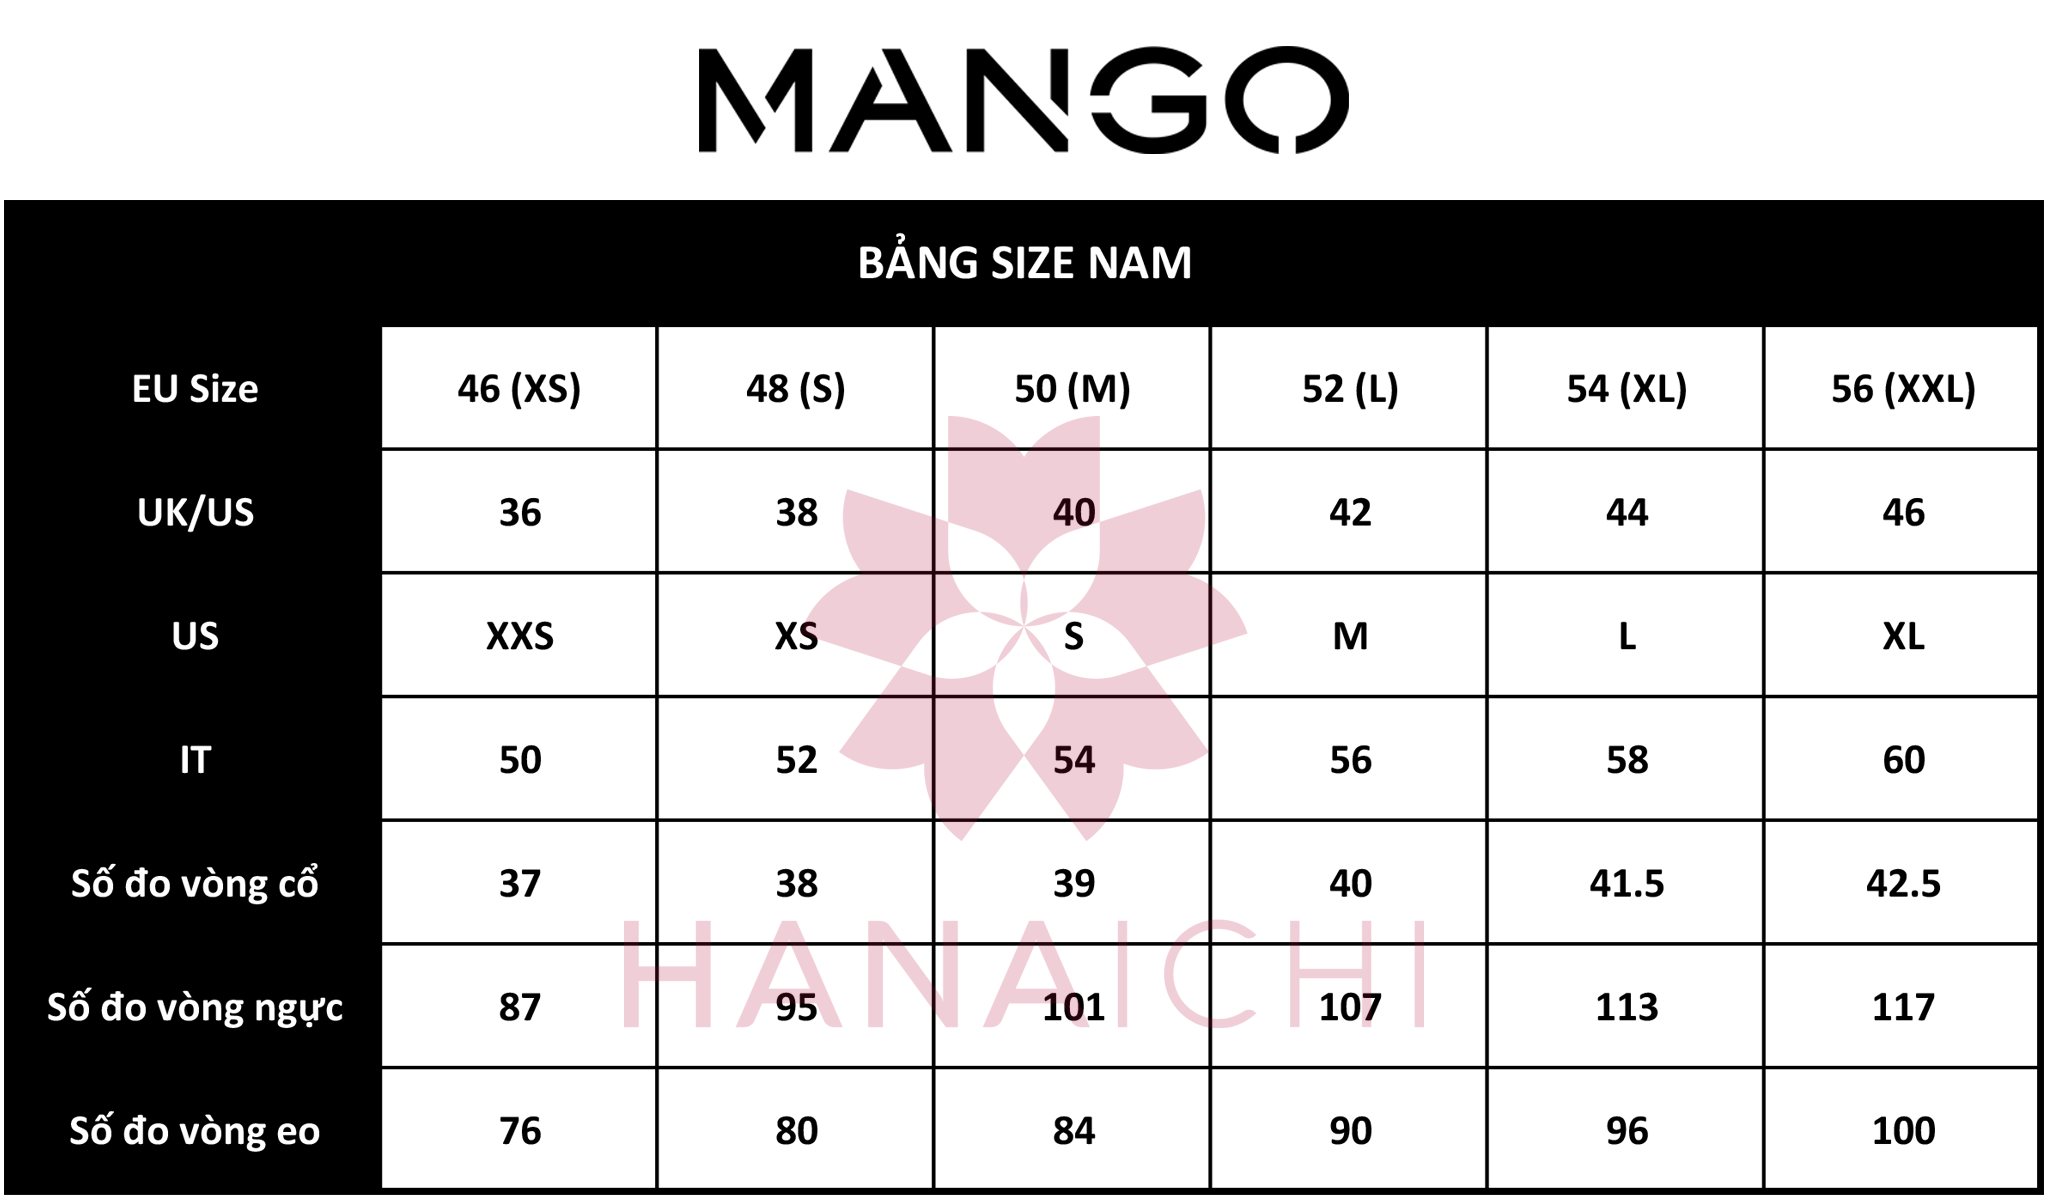 Bảng size quần áo Mango Nhật